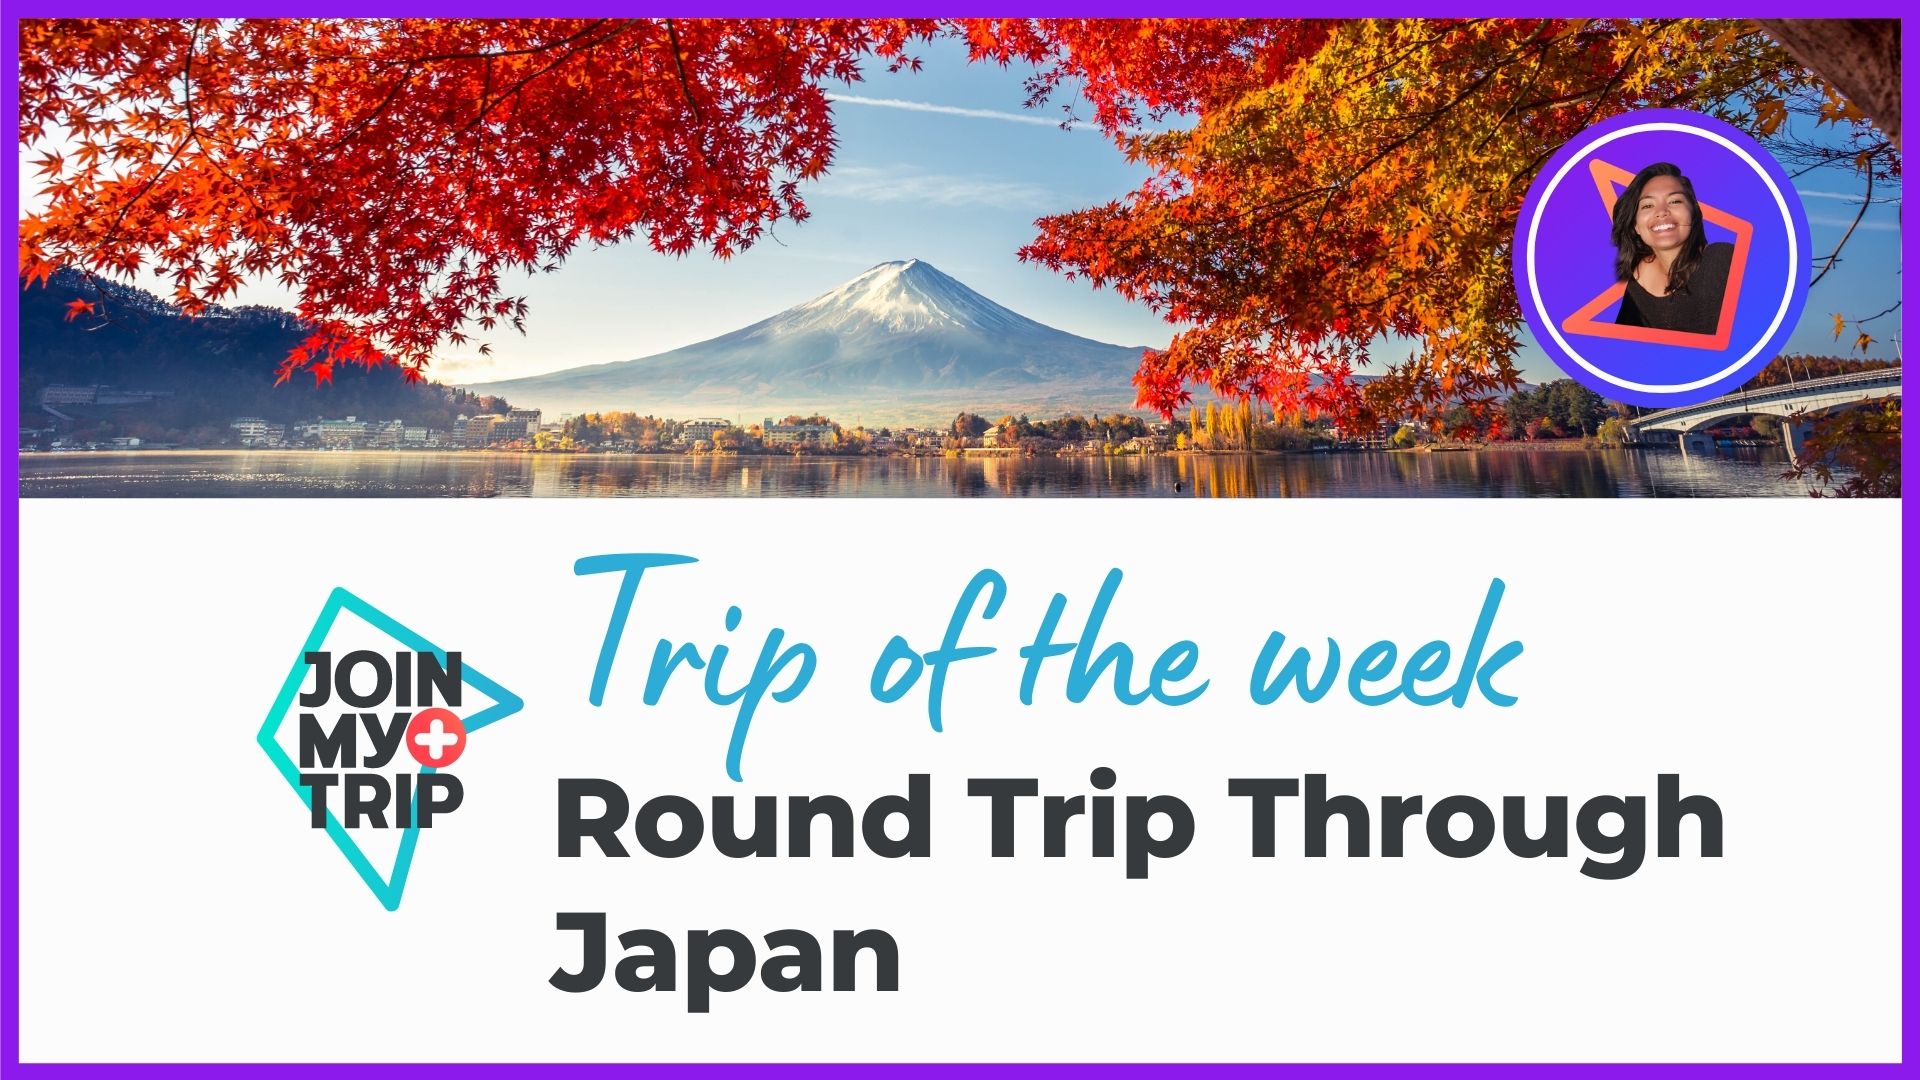 Round Trip Through Japan | Trip of the Week